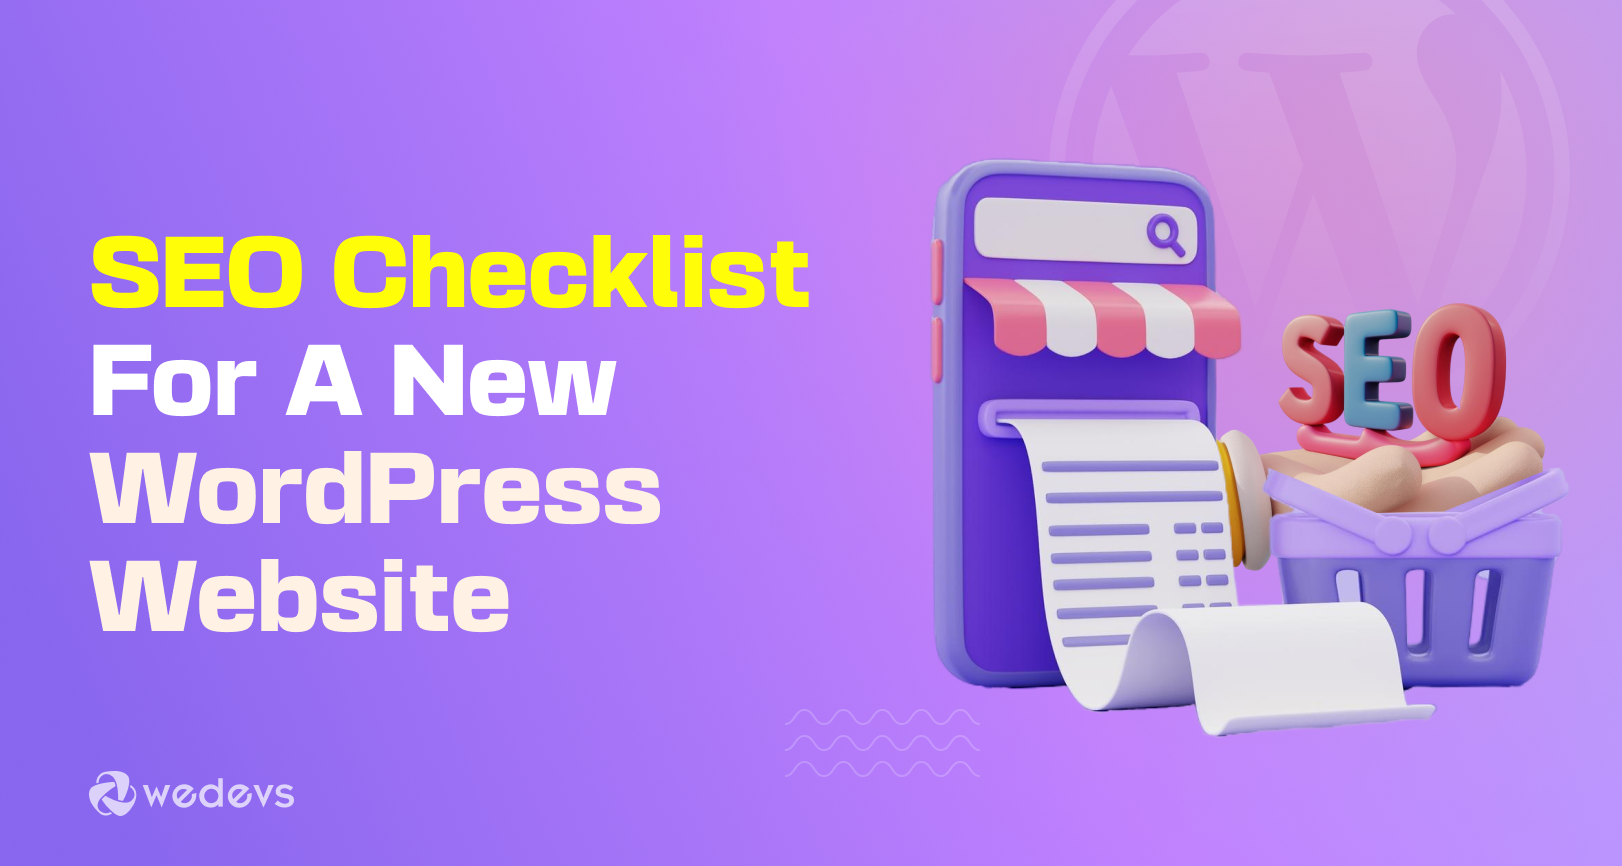 An SEO Checklist For A New WordPress Website